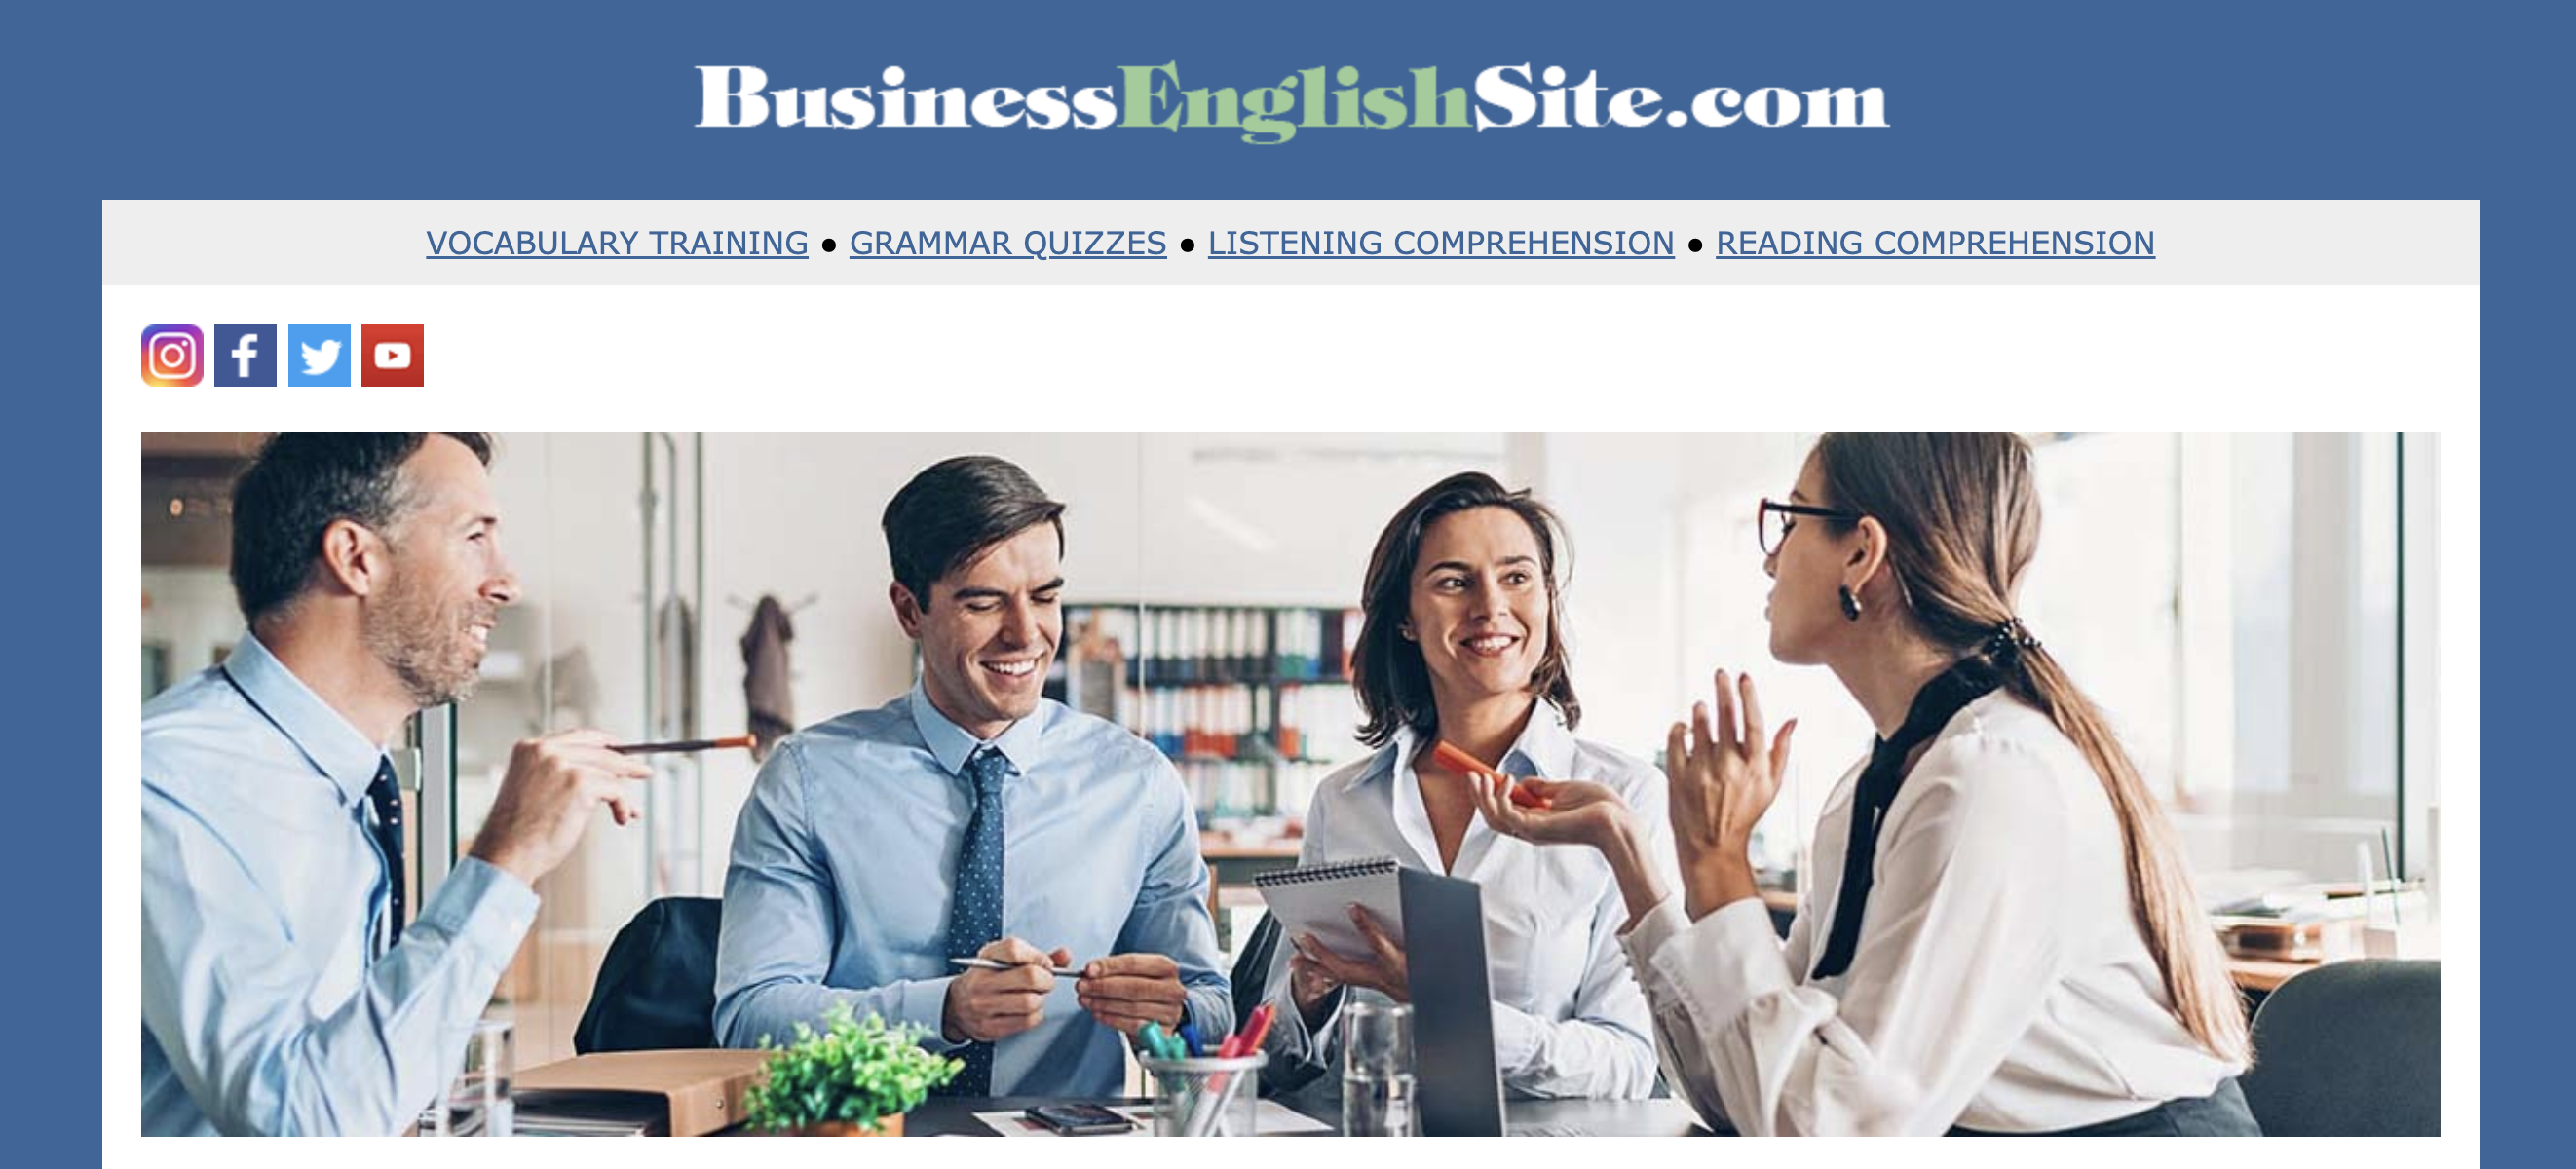 商用英文自學網站：Business English Site.com